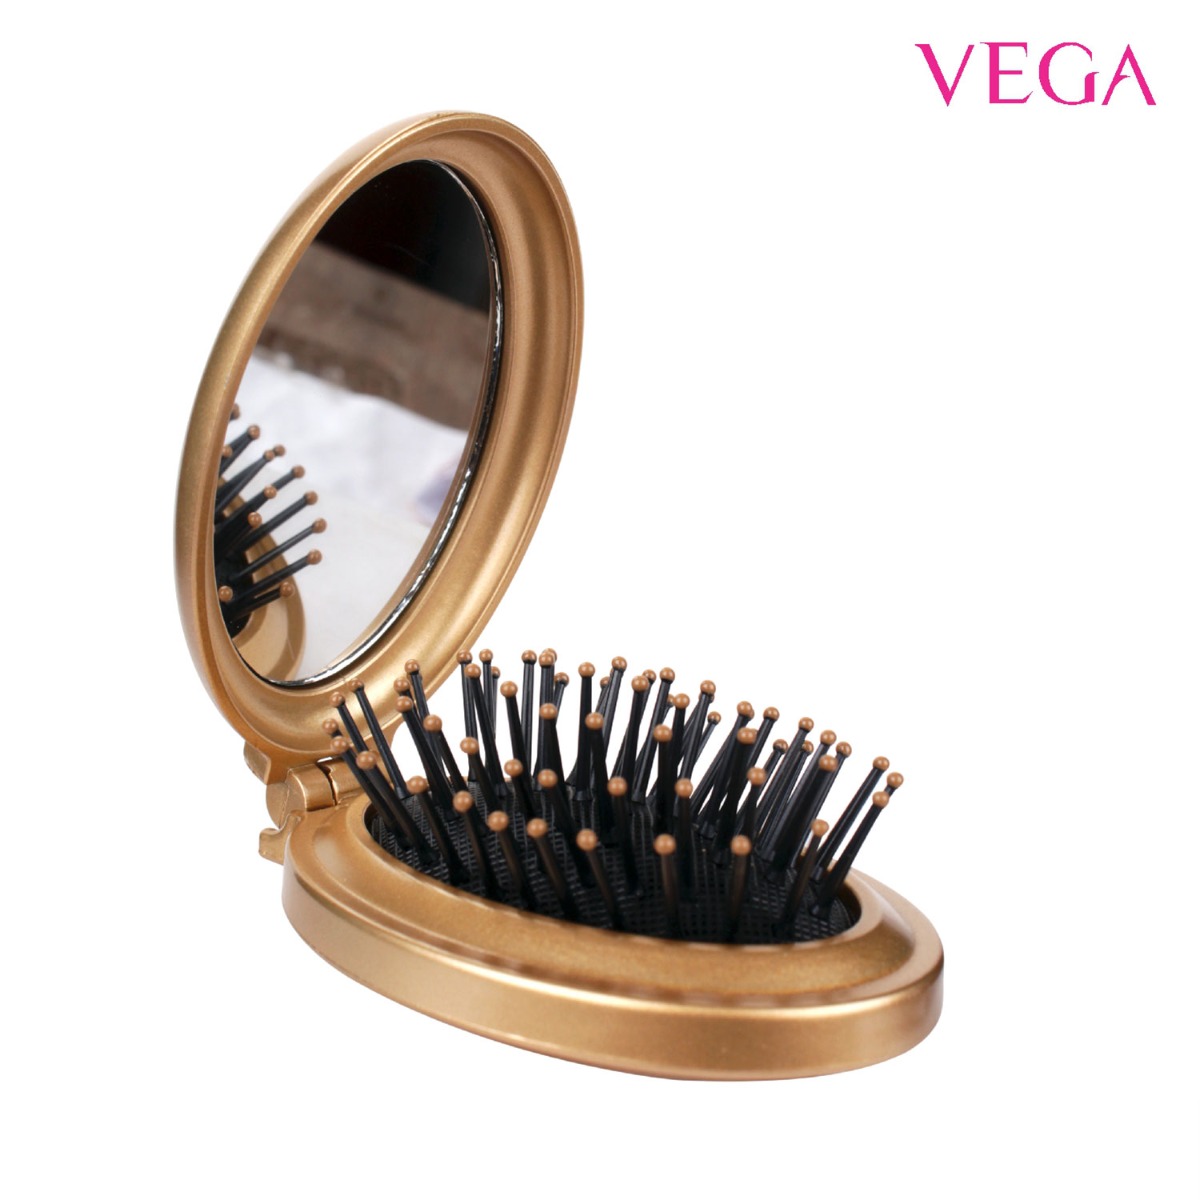 Vega Oval Brush With Mirror R3-FM